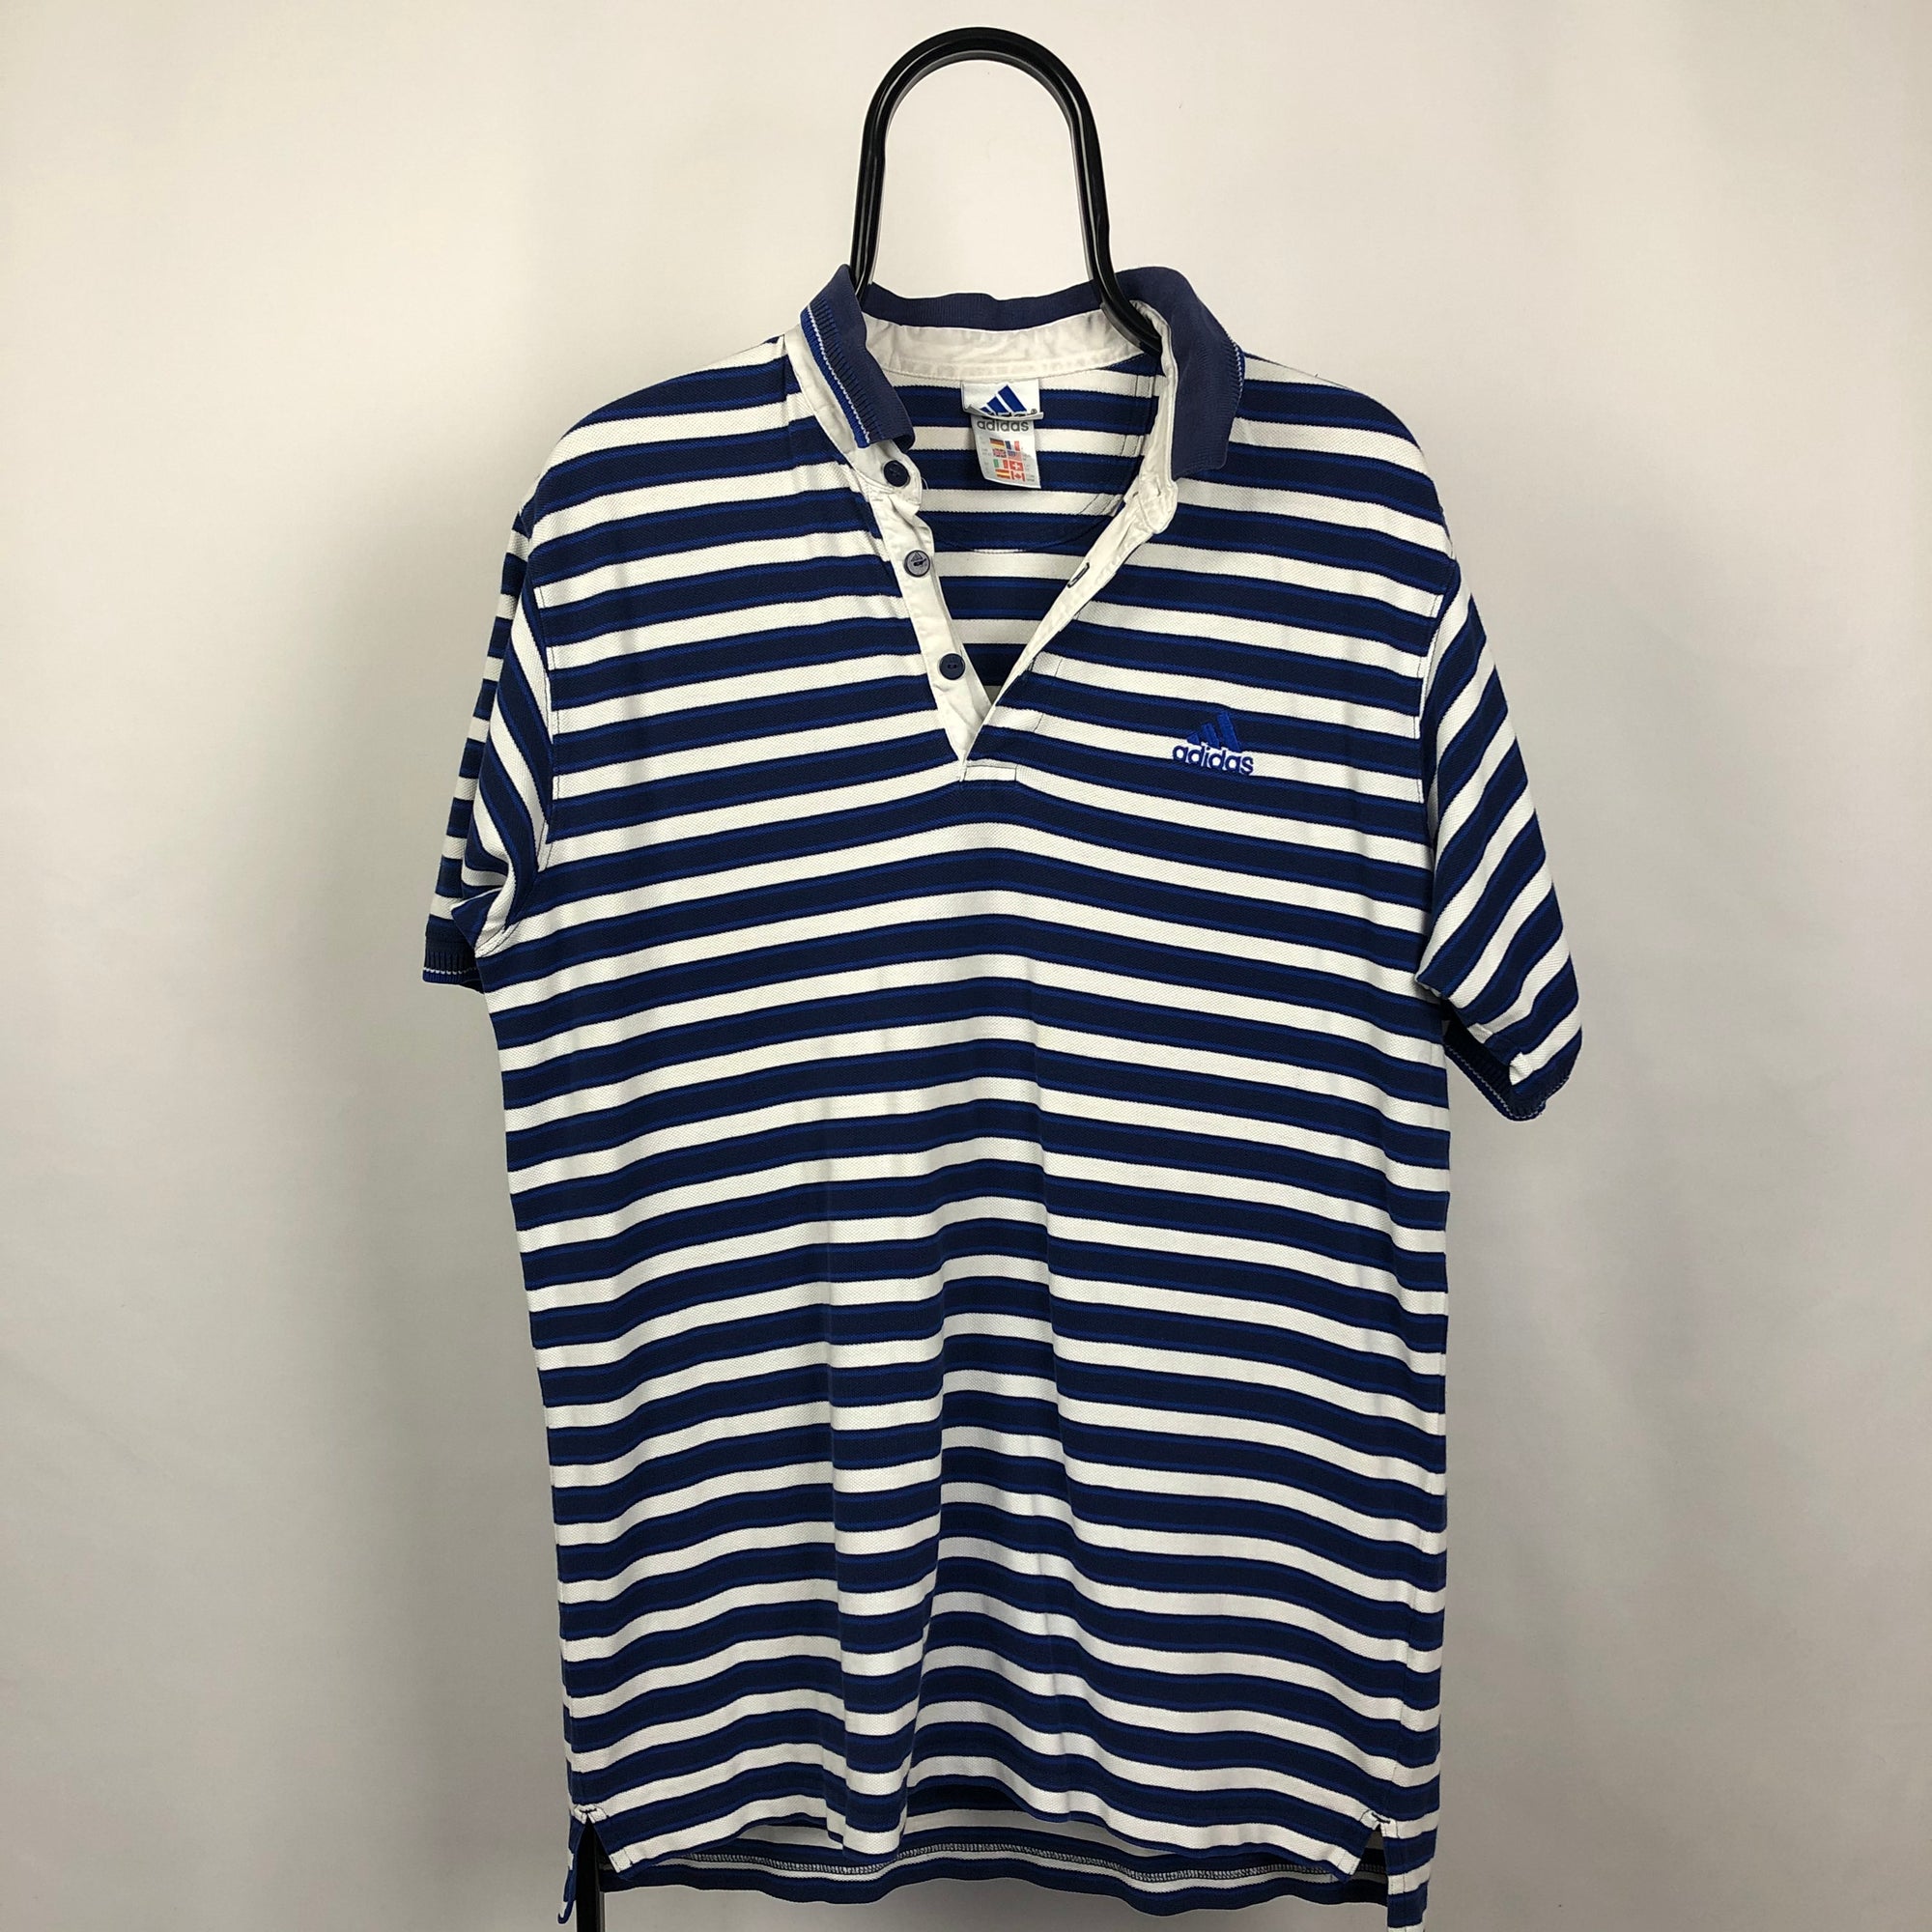 Adidas Striped Polo Shirt - Men's Large/Women's XL